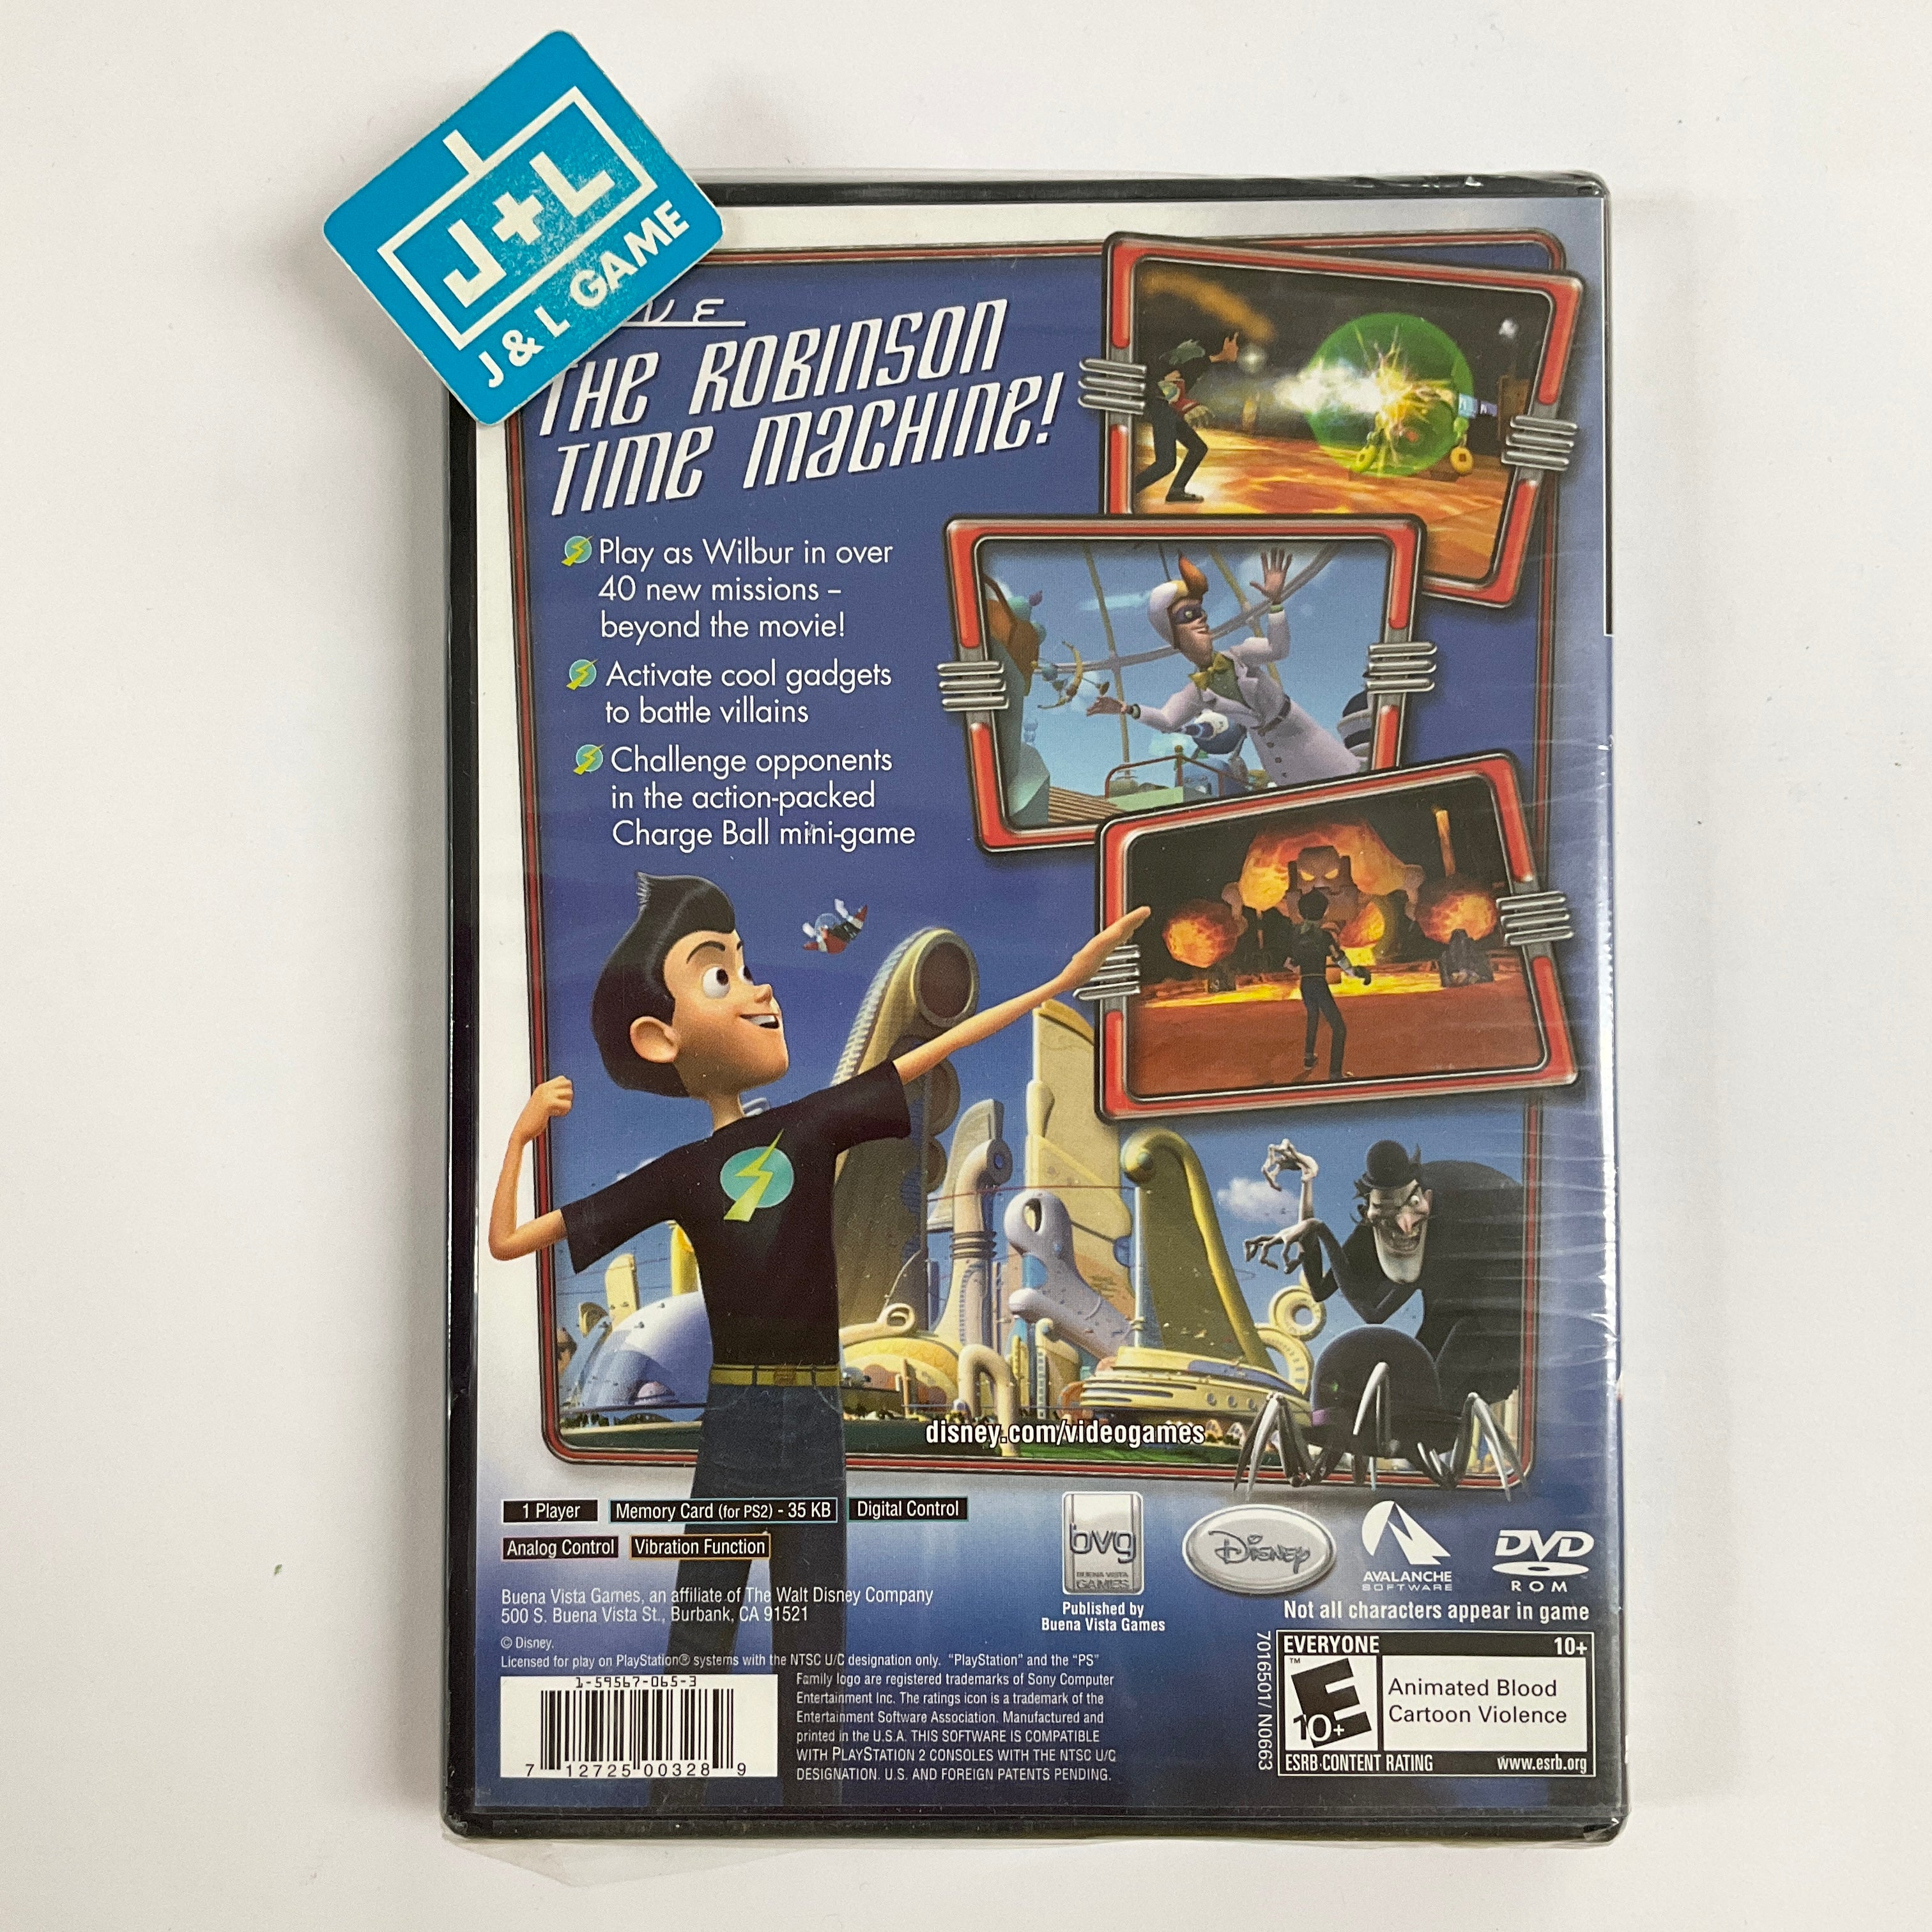 Meet the Robinsons - (PS2) PlayStation 2 Video Games Disney Interactive Studios   